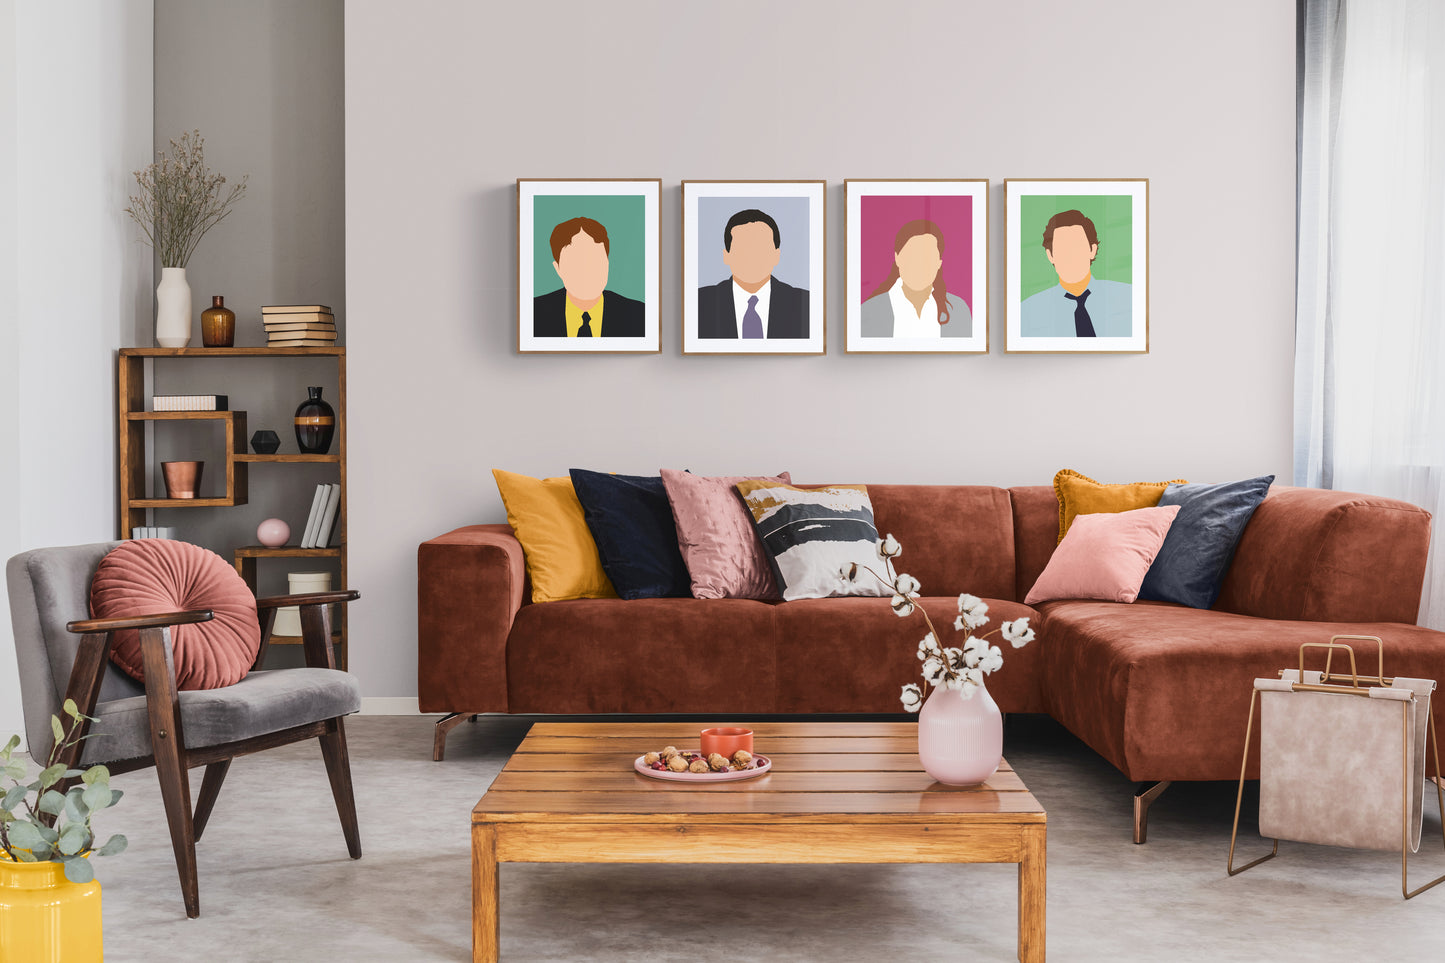 The Office tv show portrait minimal artwork set of 4